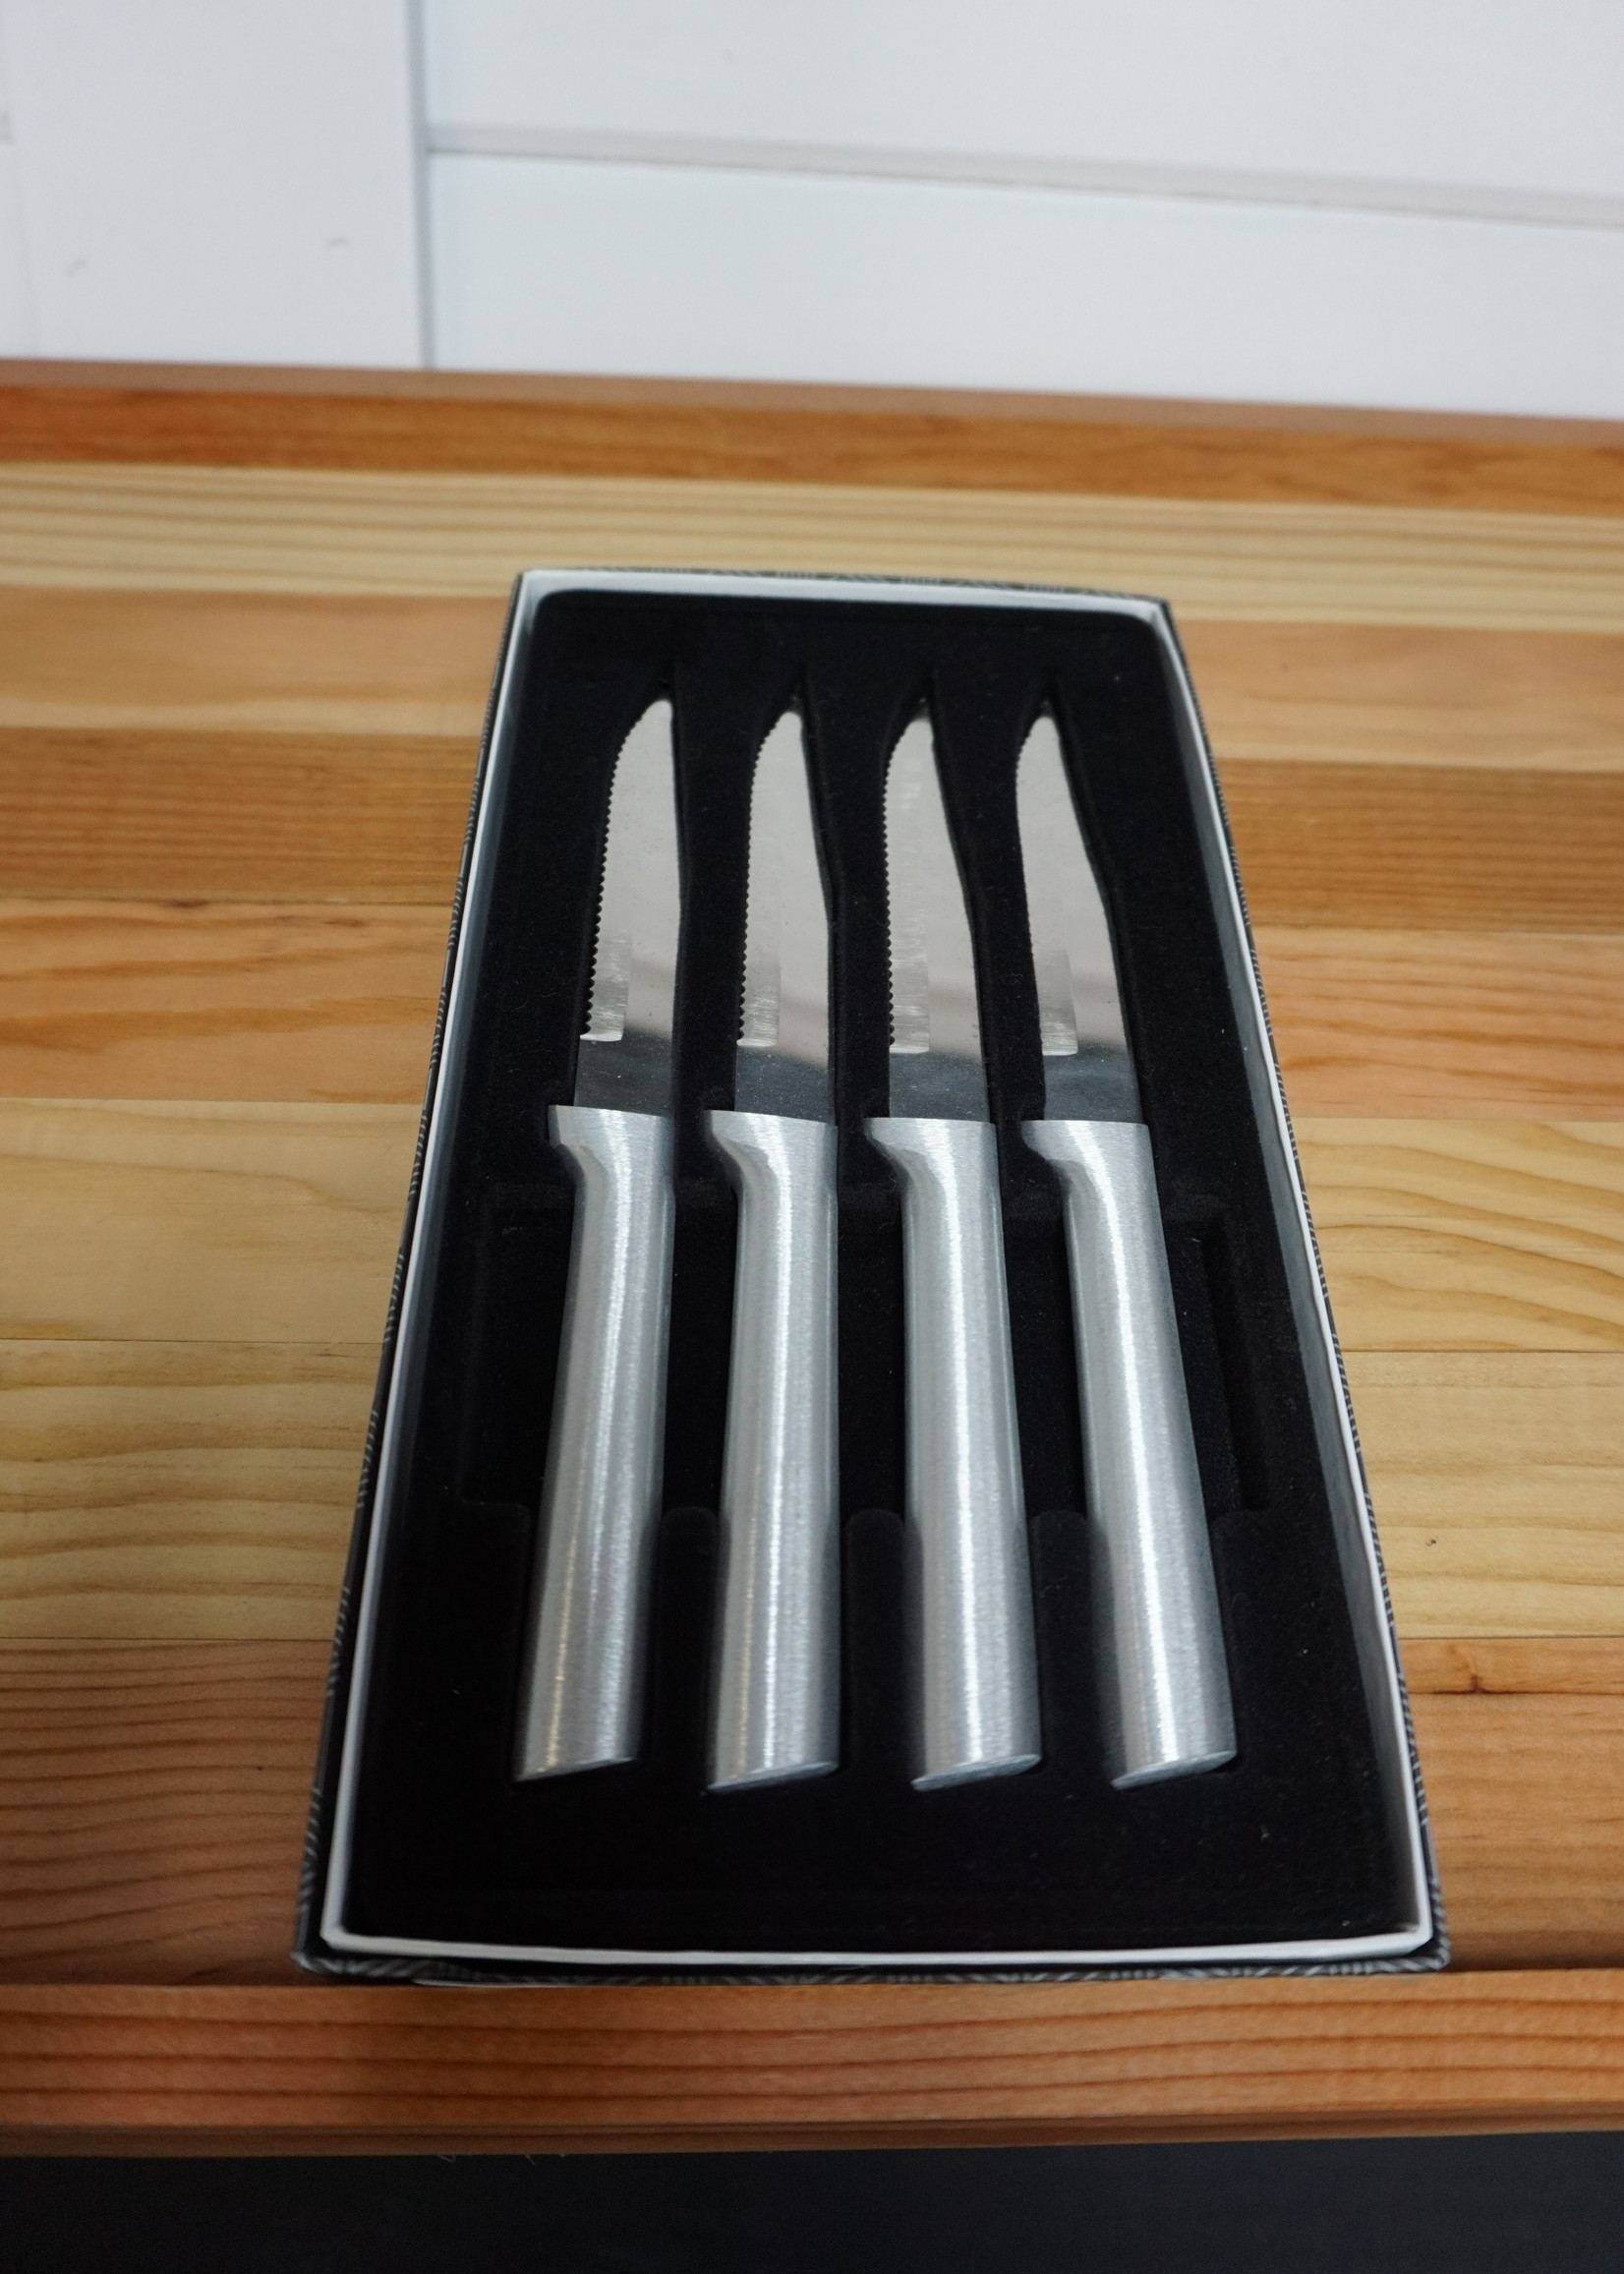 https://cdn.shoplightspeed.com/shops/654474/files/43252812/1652x2313x1/rada-rada-4-serrated-steak-knives-set.jpg